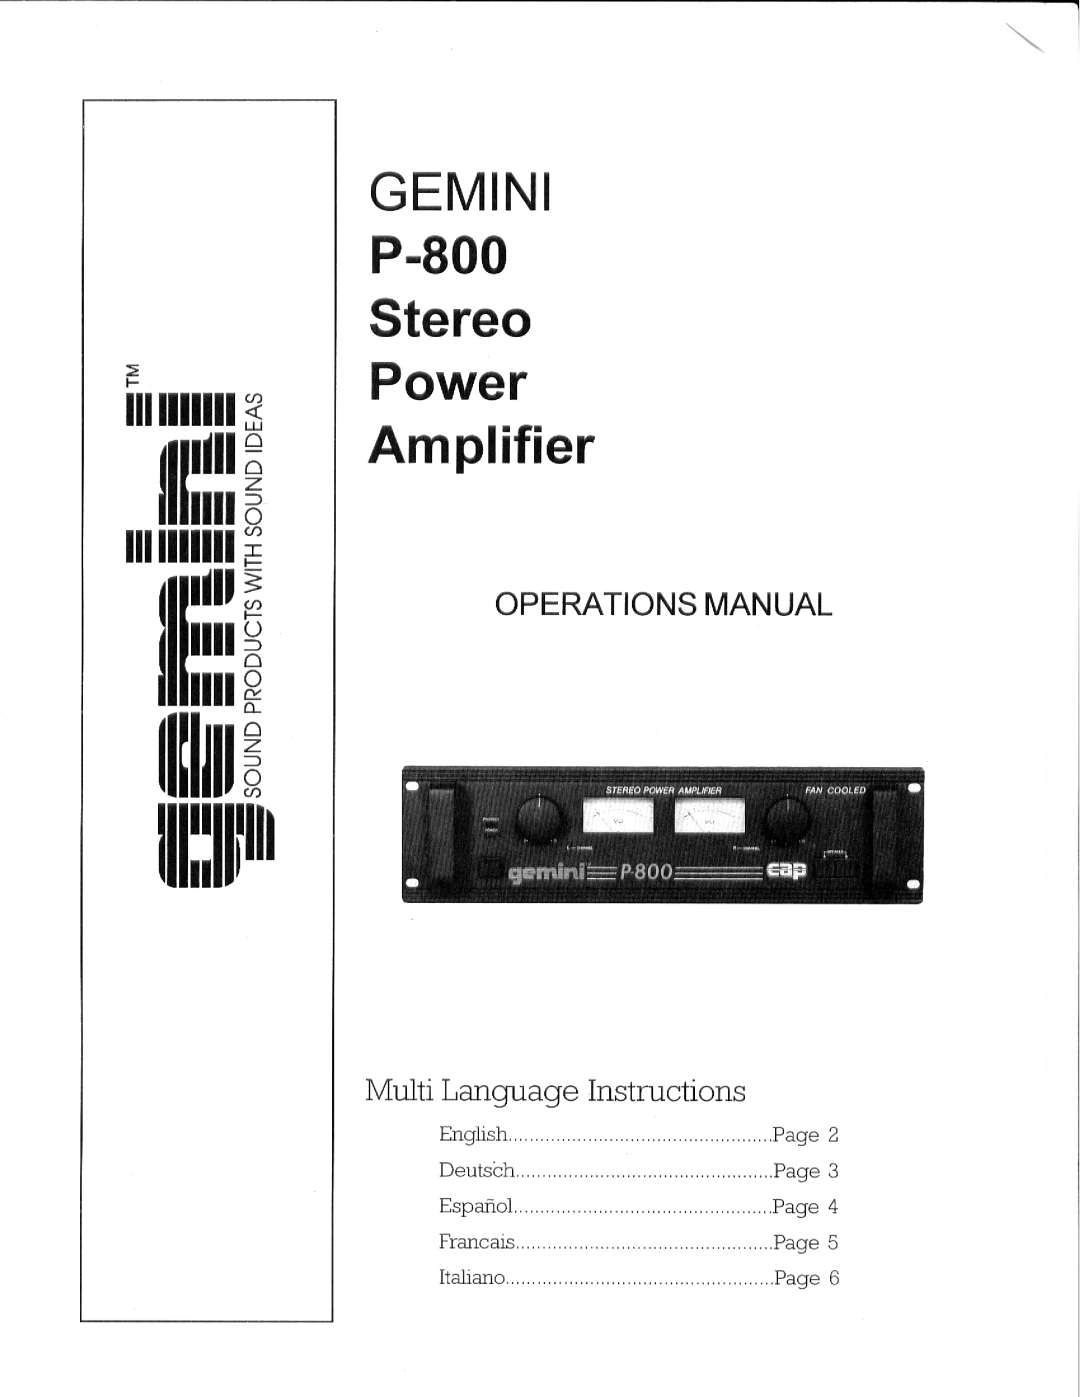 Gemini Industries P-800 manual 